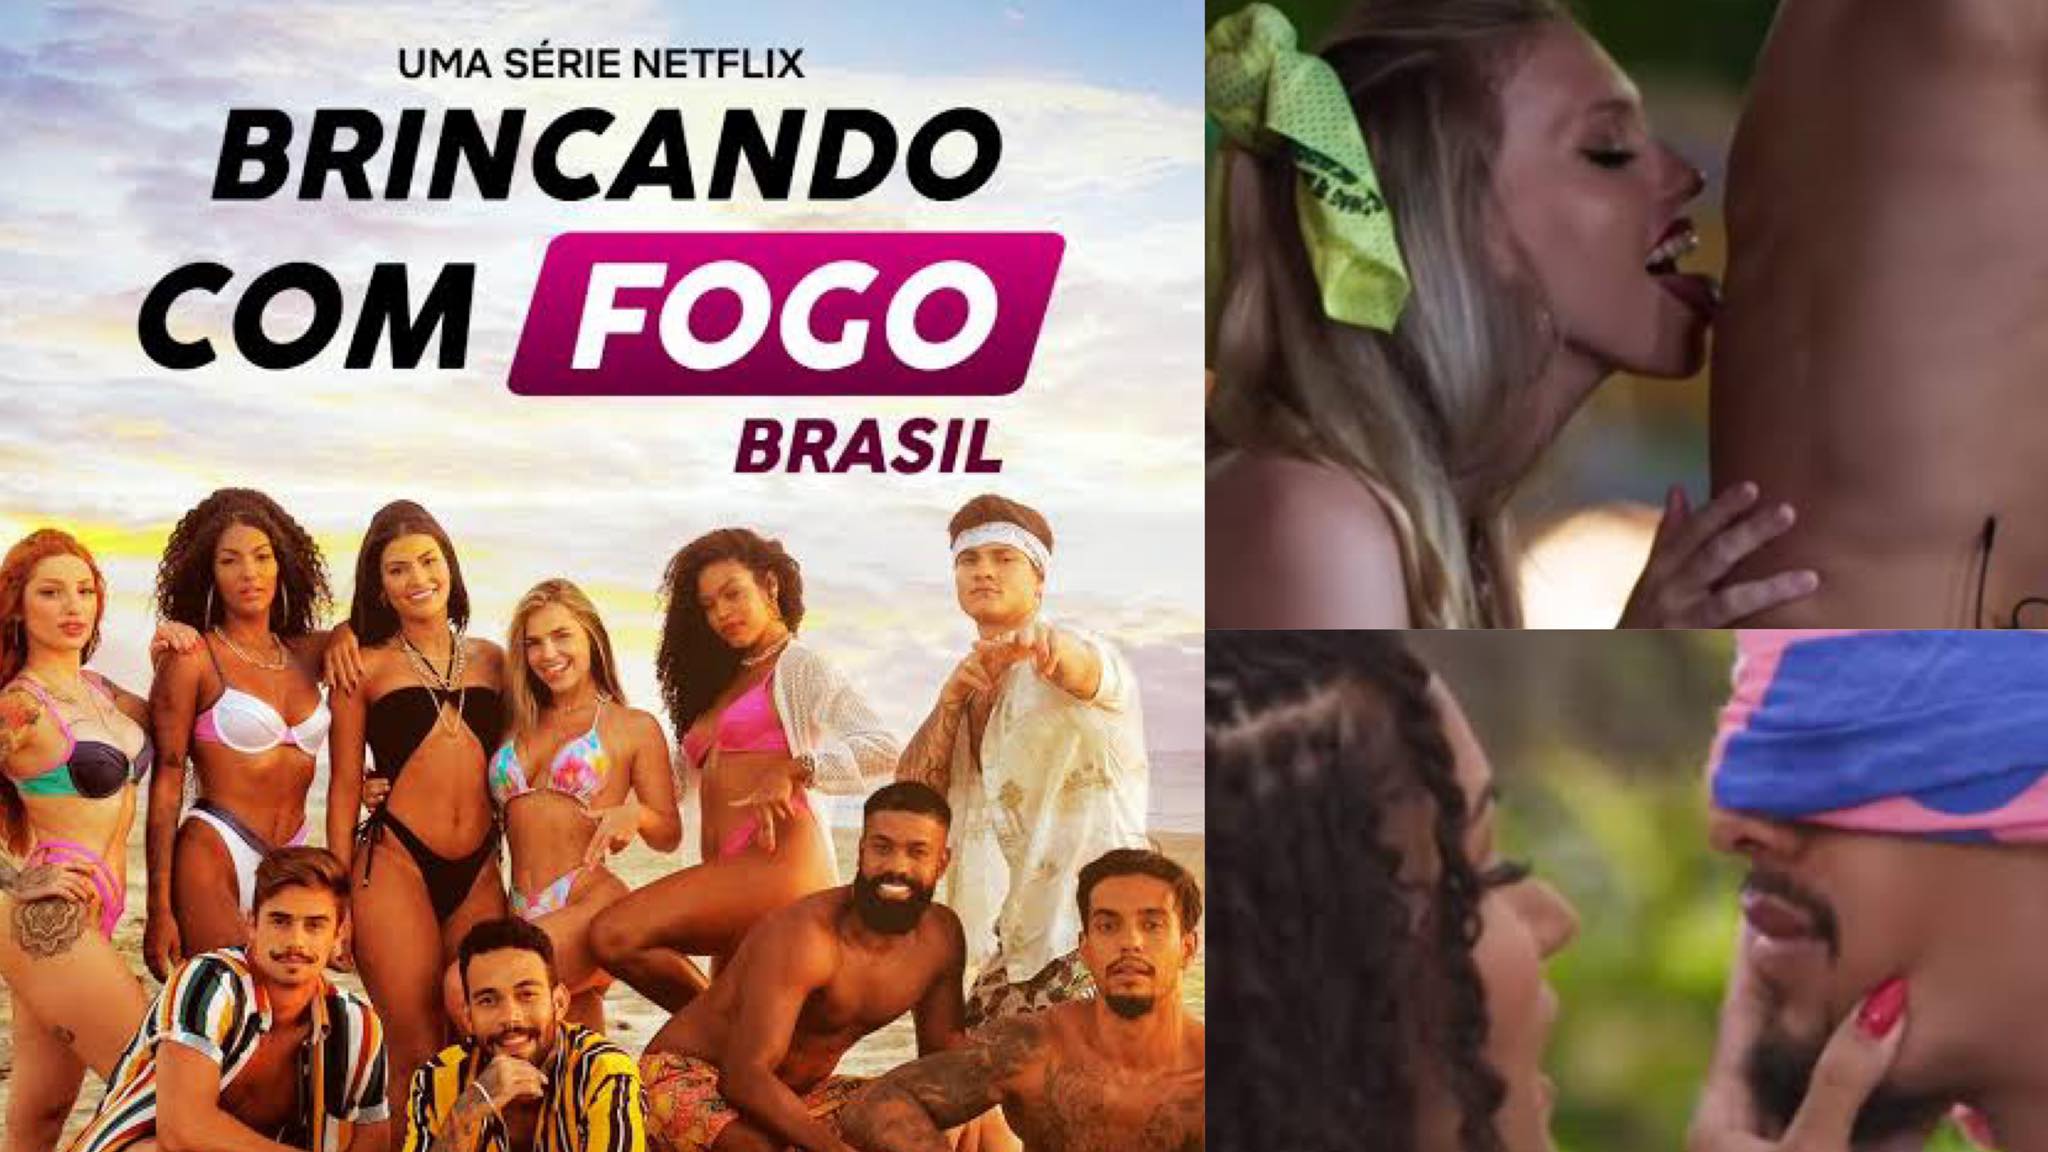 Alerta de reality fofo!!! 🚨🚨🚨 Acabou de estrear na @Netflix Brasil